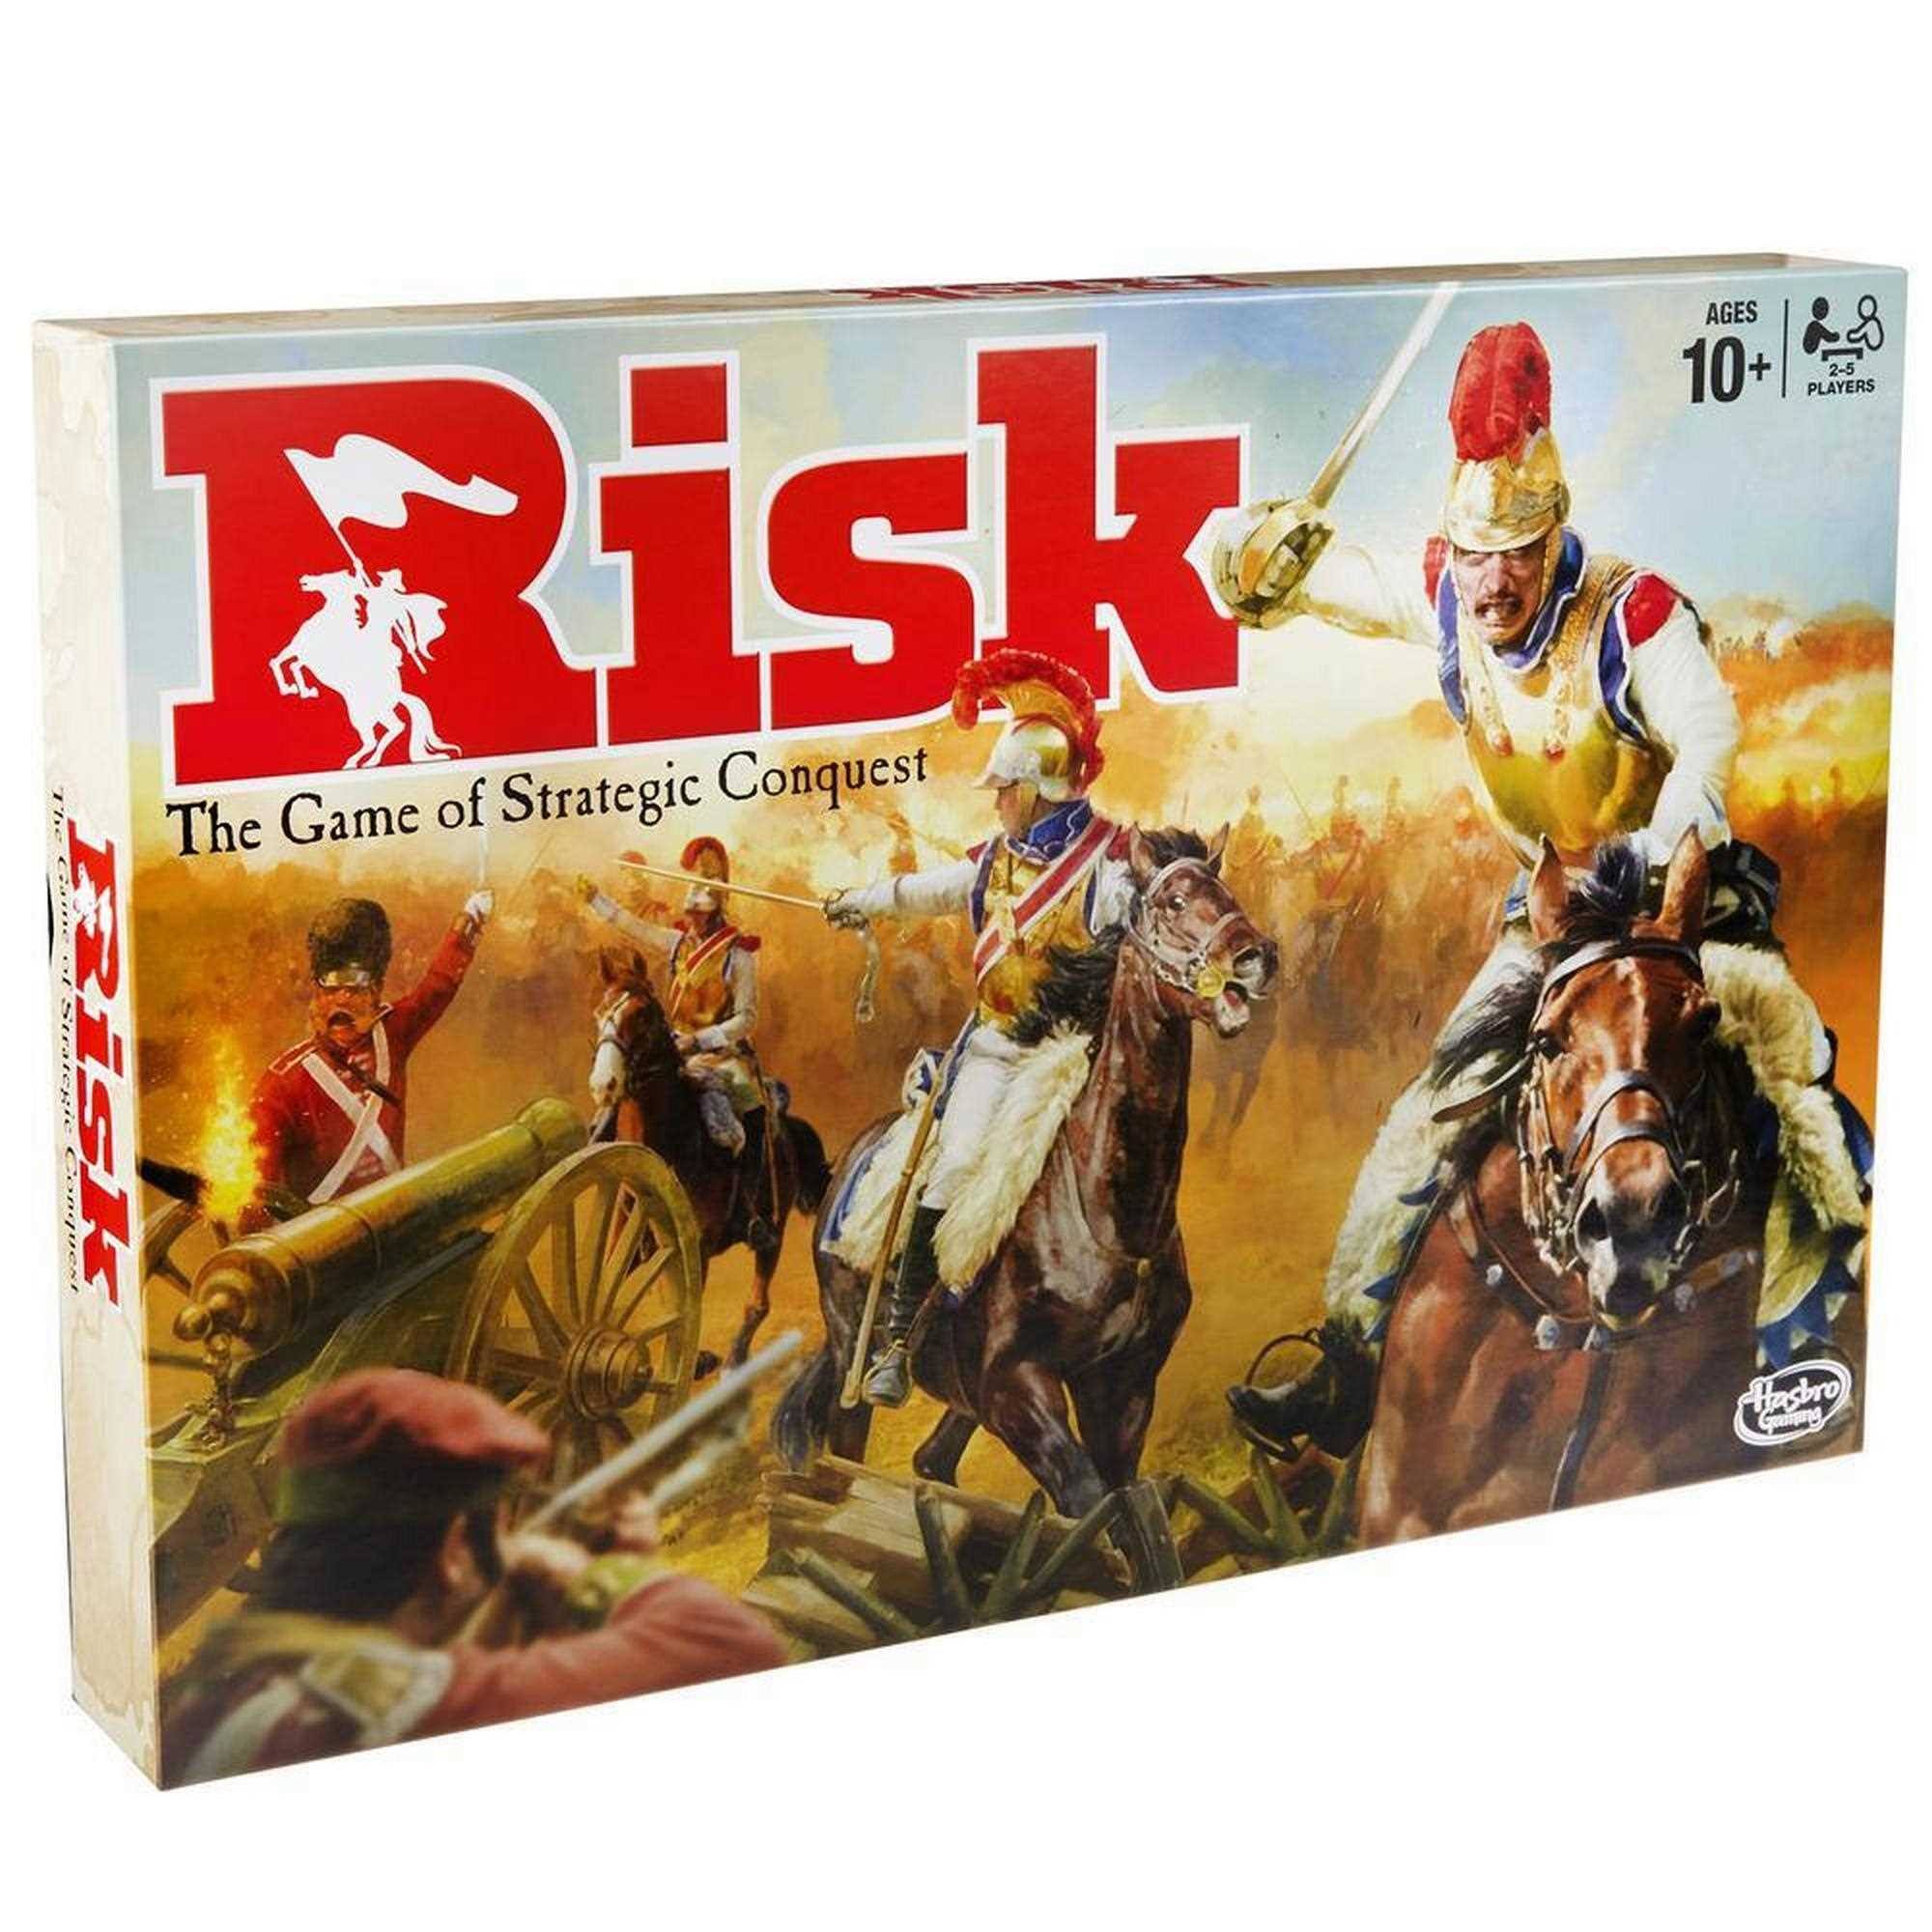 Risk (Board Game)